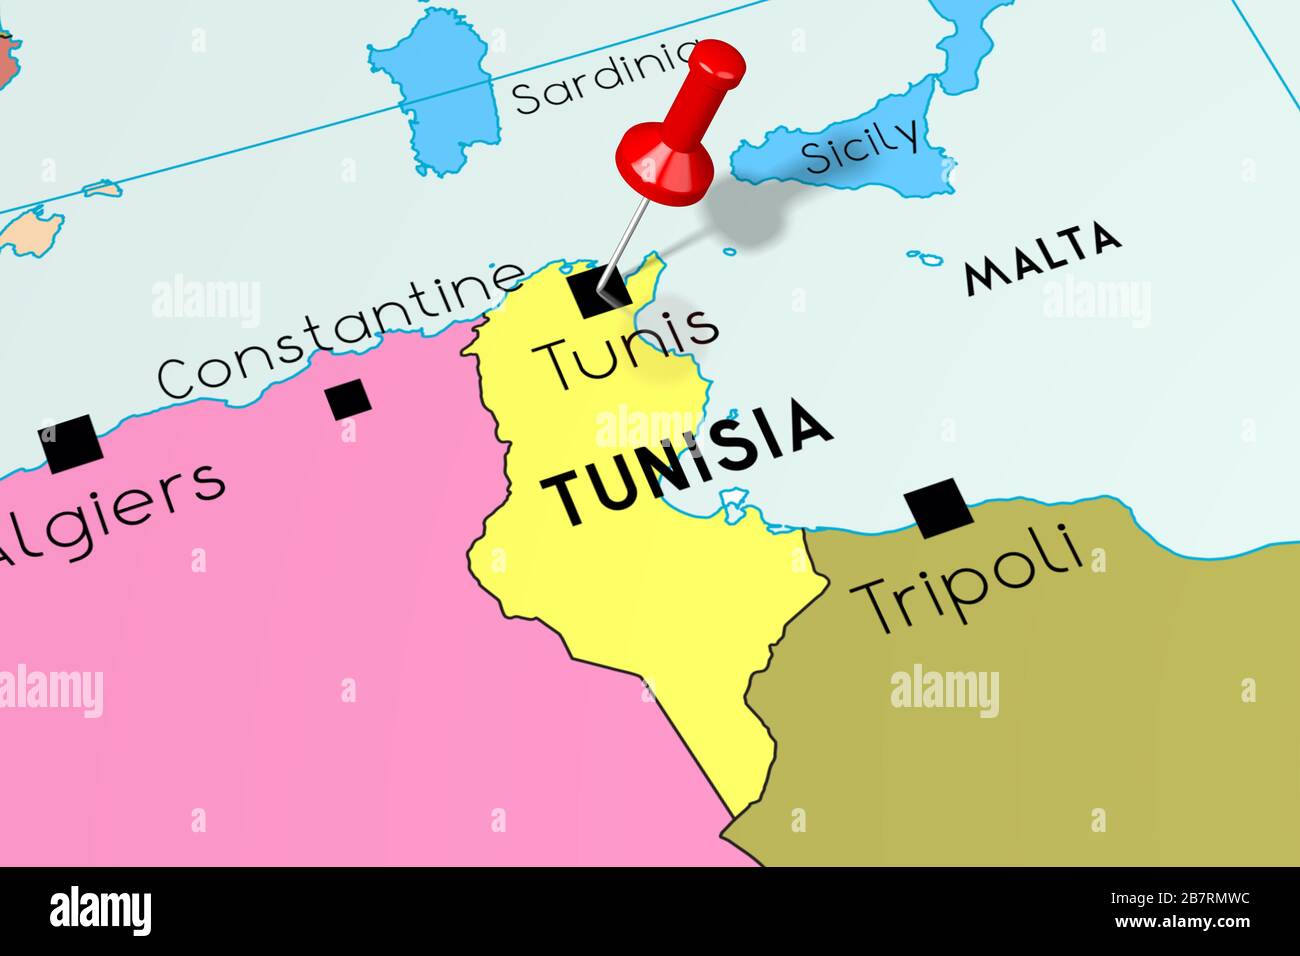 Tunisia, Tunis - capital city, pinned on political map Stock Photo